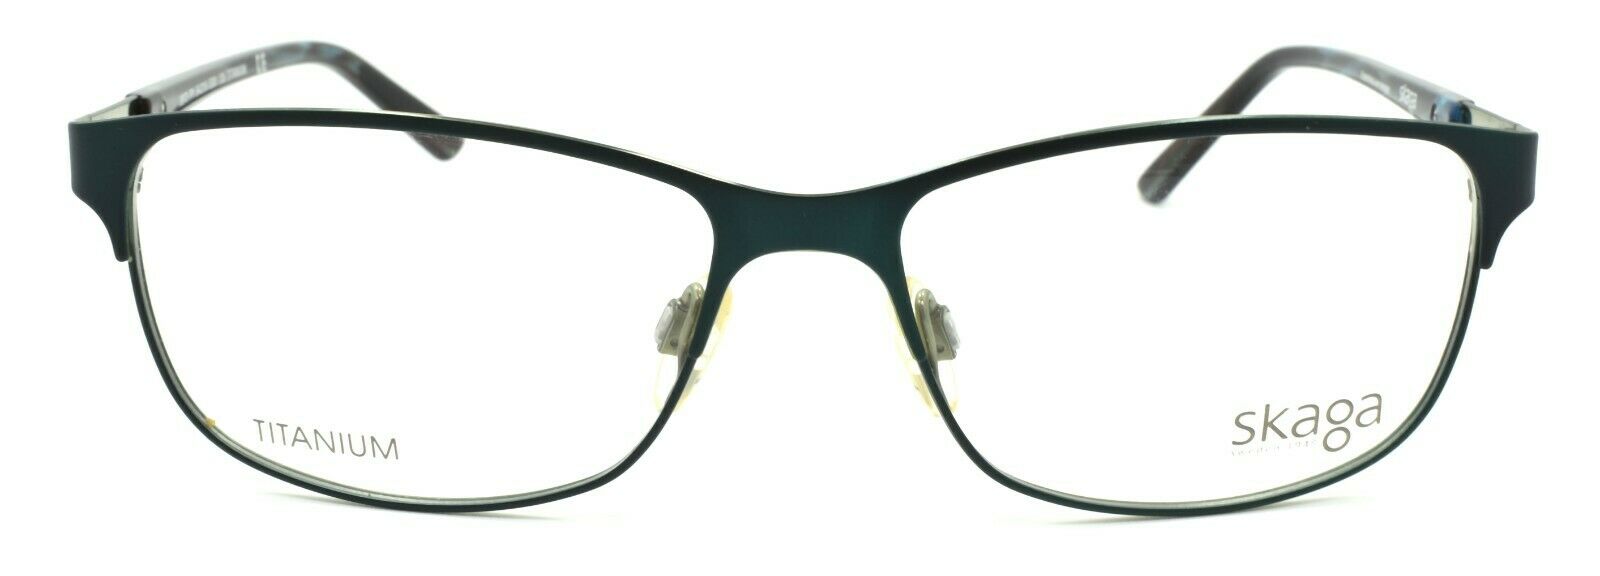 2-Skaga 3870 Py 5301 Women's Eyeglasses Frames TITANIUM 54-15-135 Green-IKSpecs